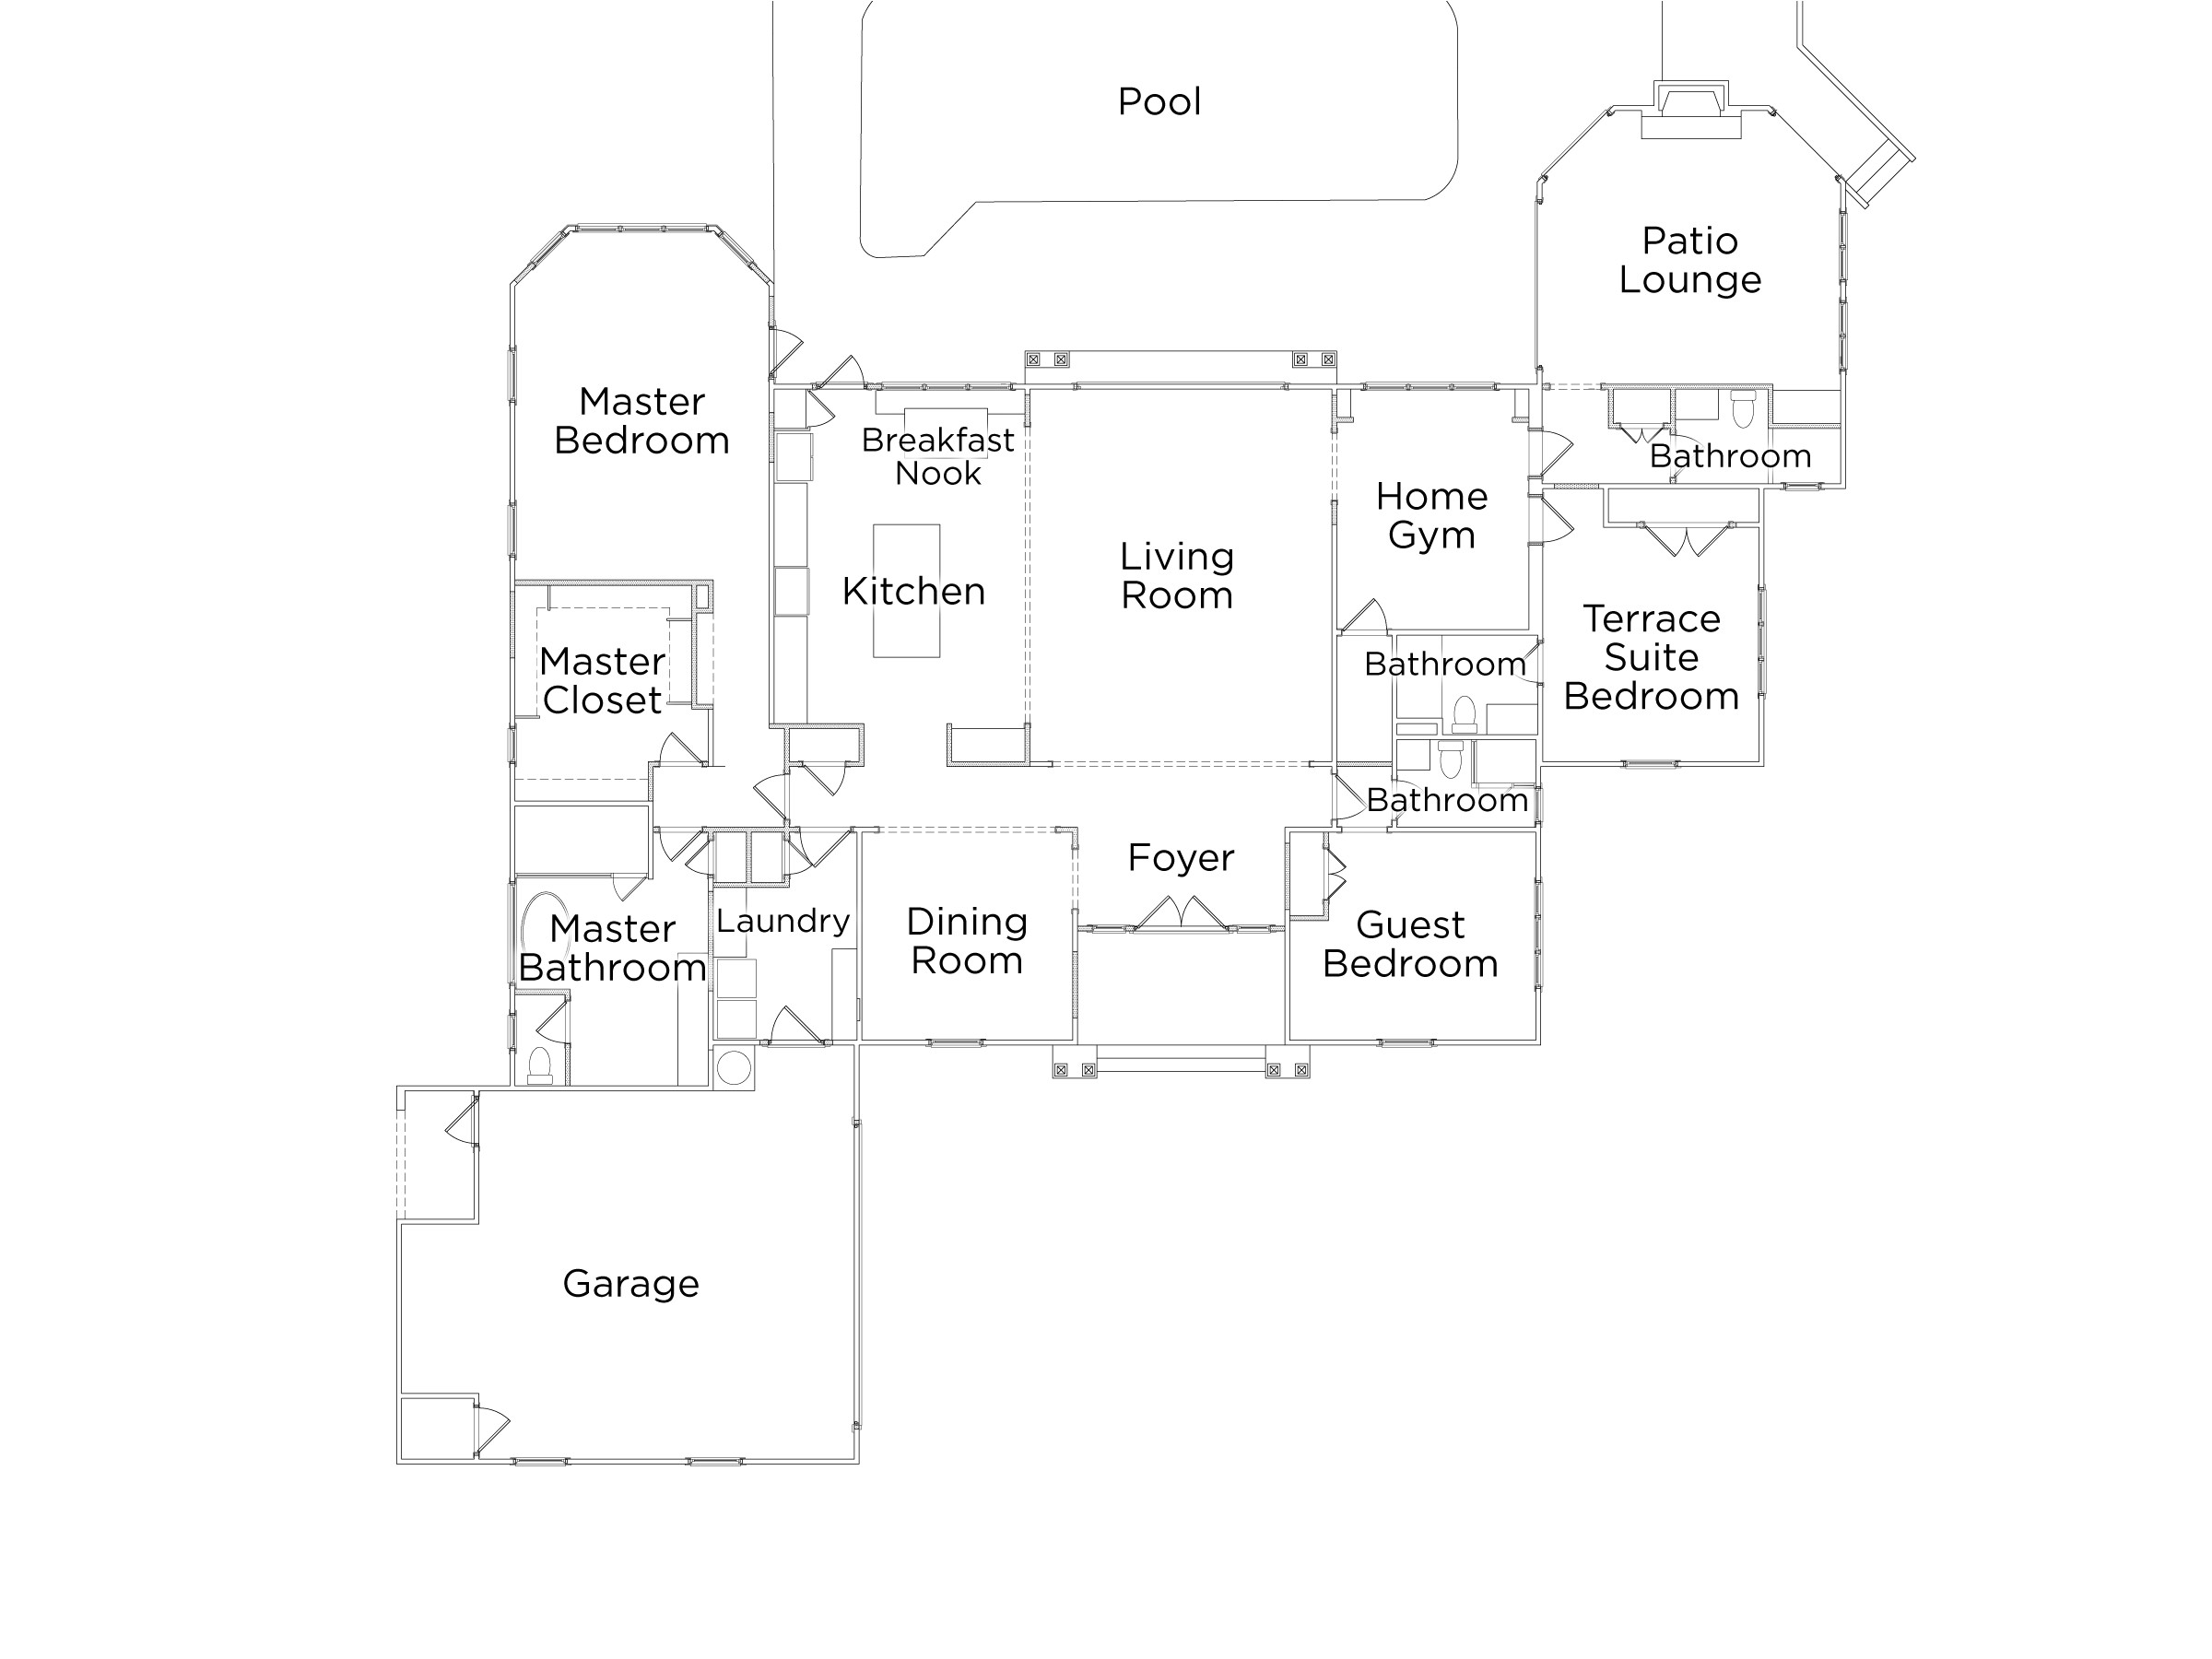 hgtv home design floor plans